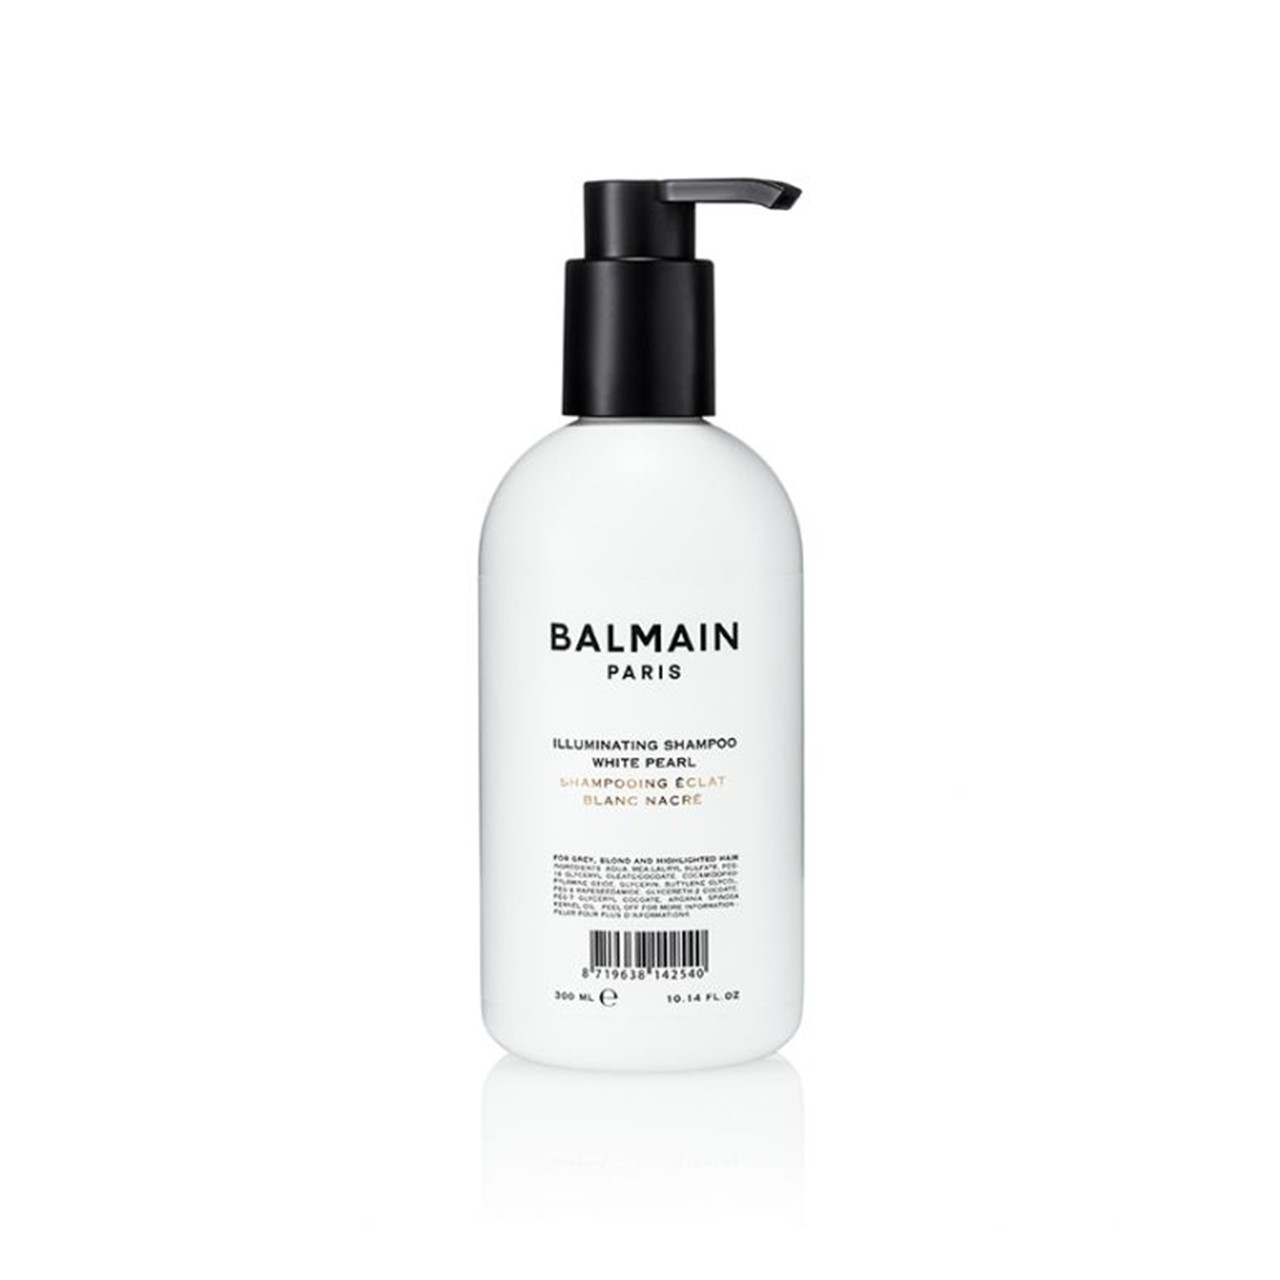 Balmain Hair Illuminating Shampoo White Pearl 300ml (10.14 fl oz)